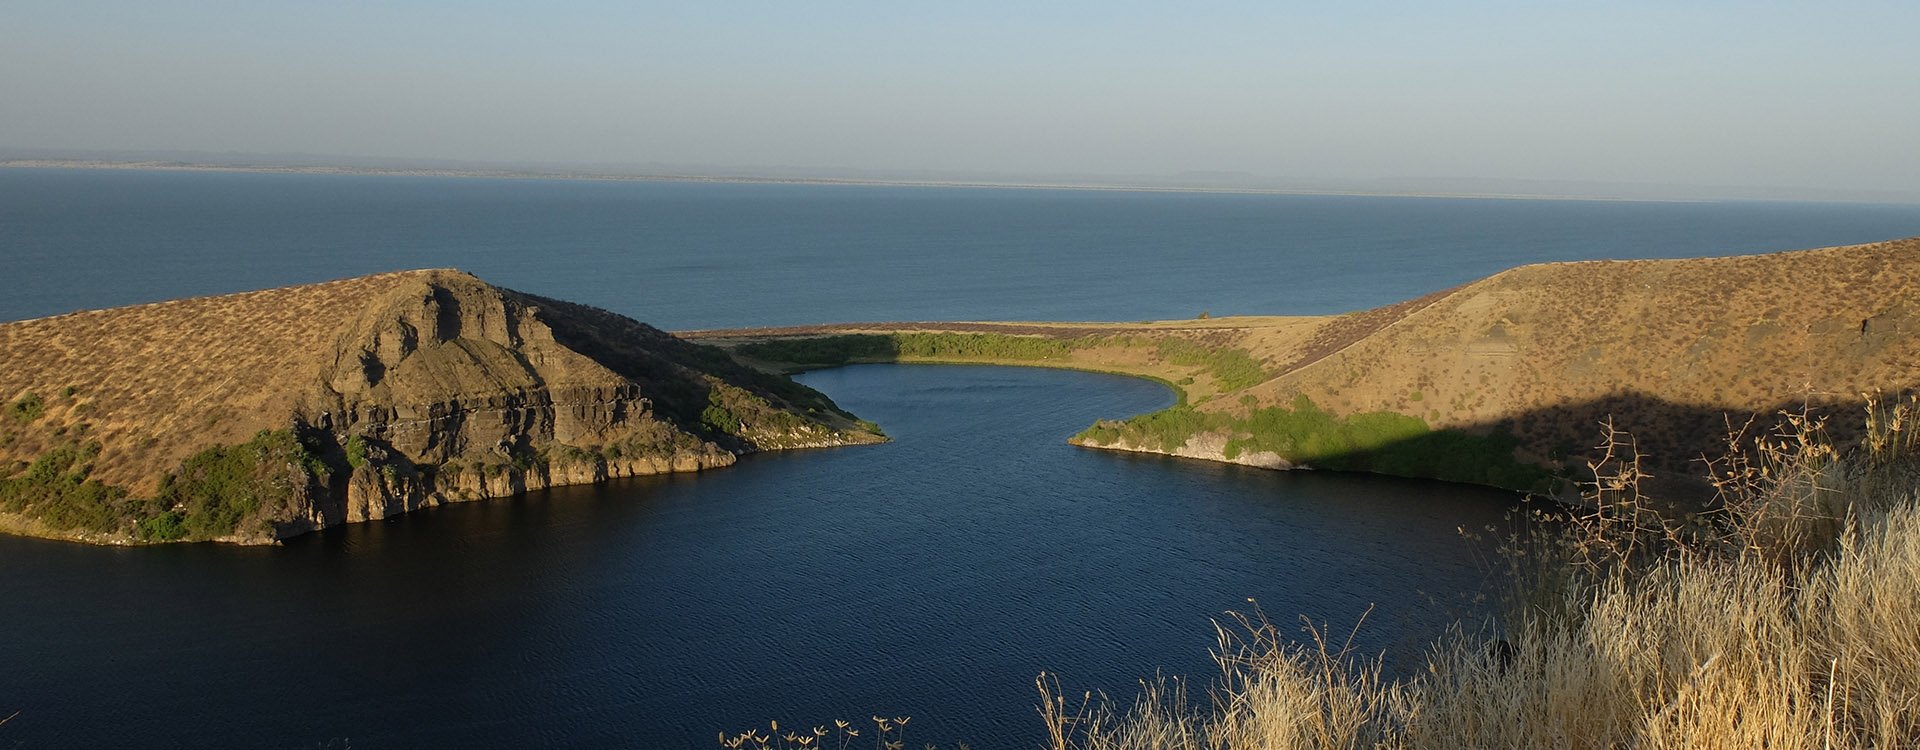 Turkana lake, Northern Kenya